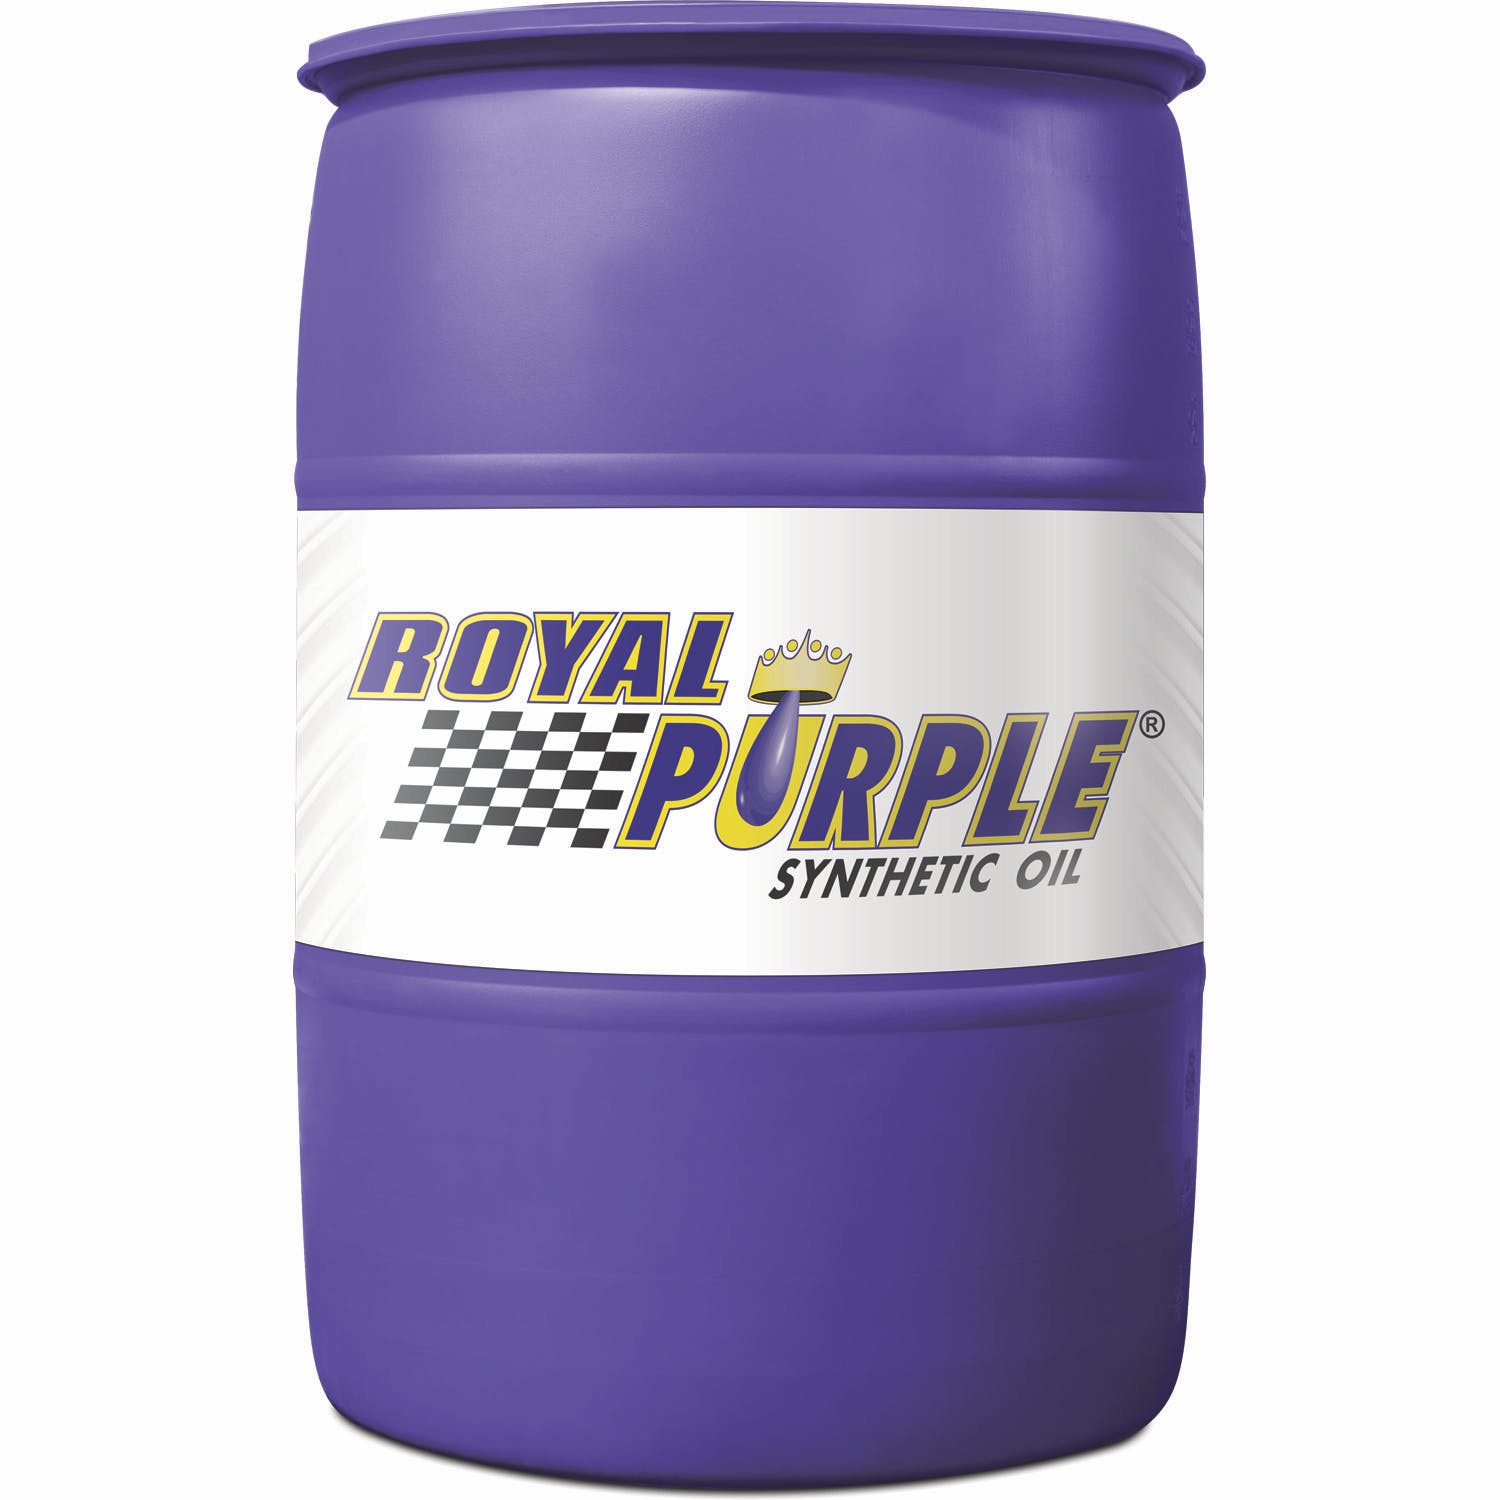 Royal Purple 55530 5W-30 Passenger Car Engine Oil 55 gal Drum